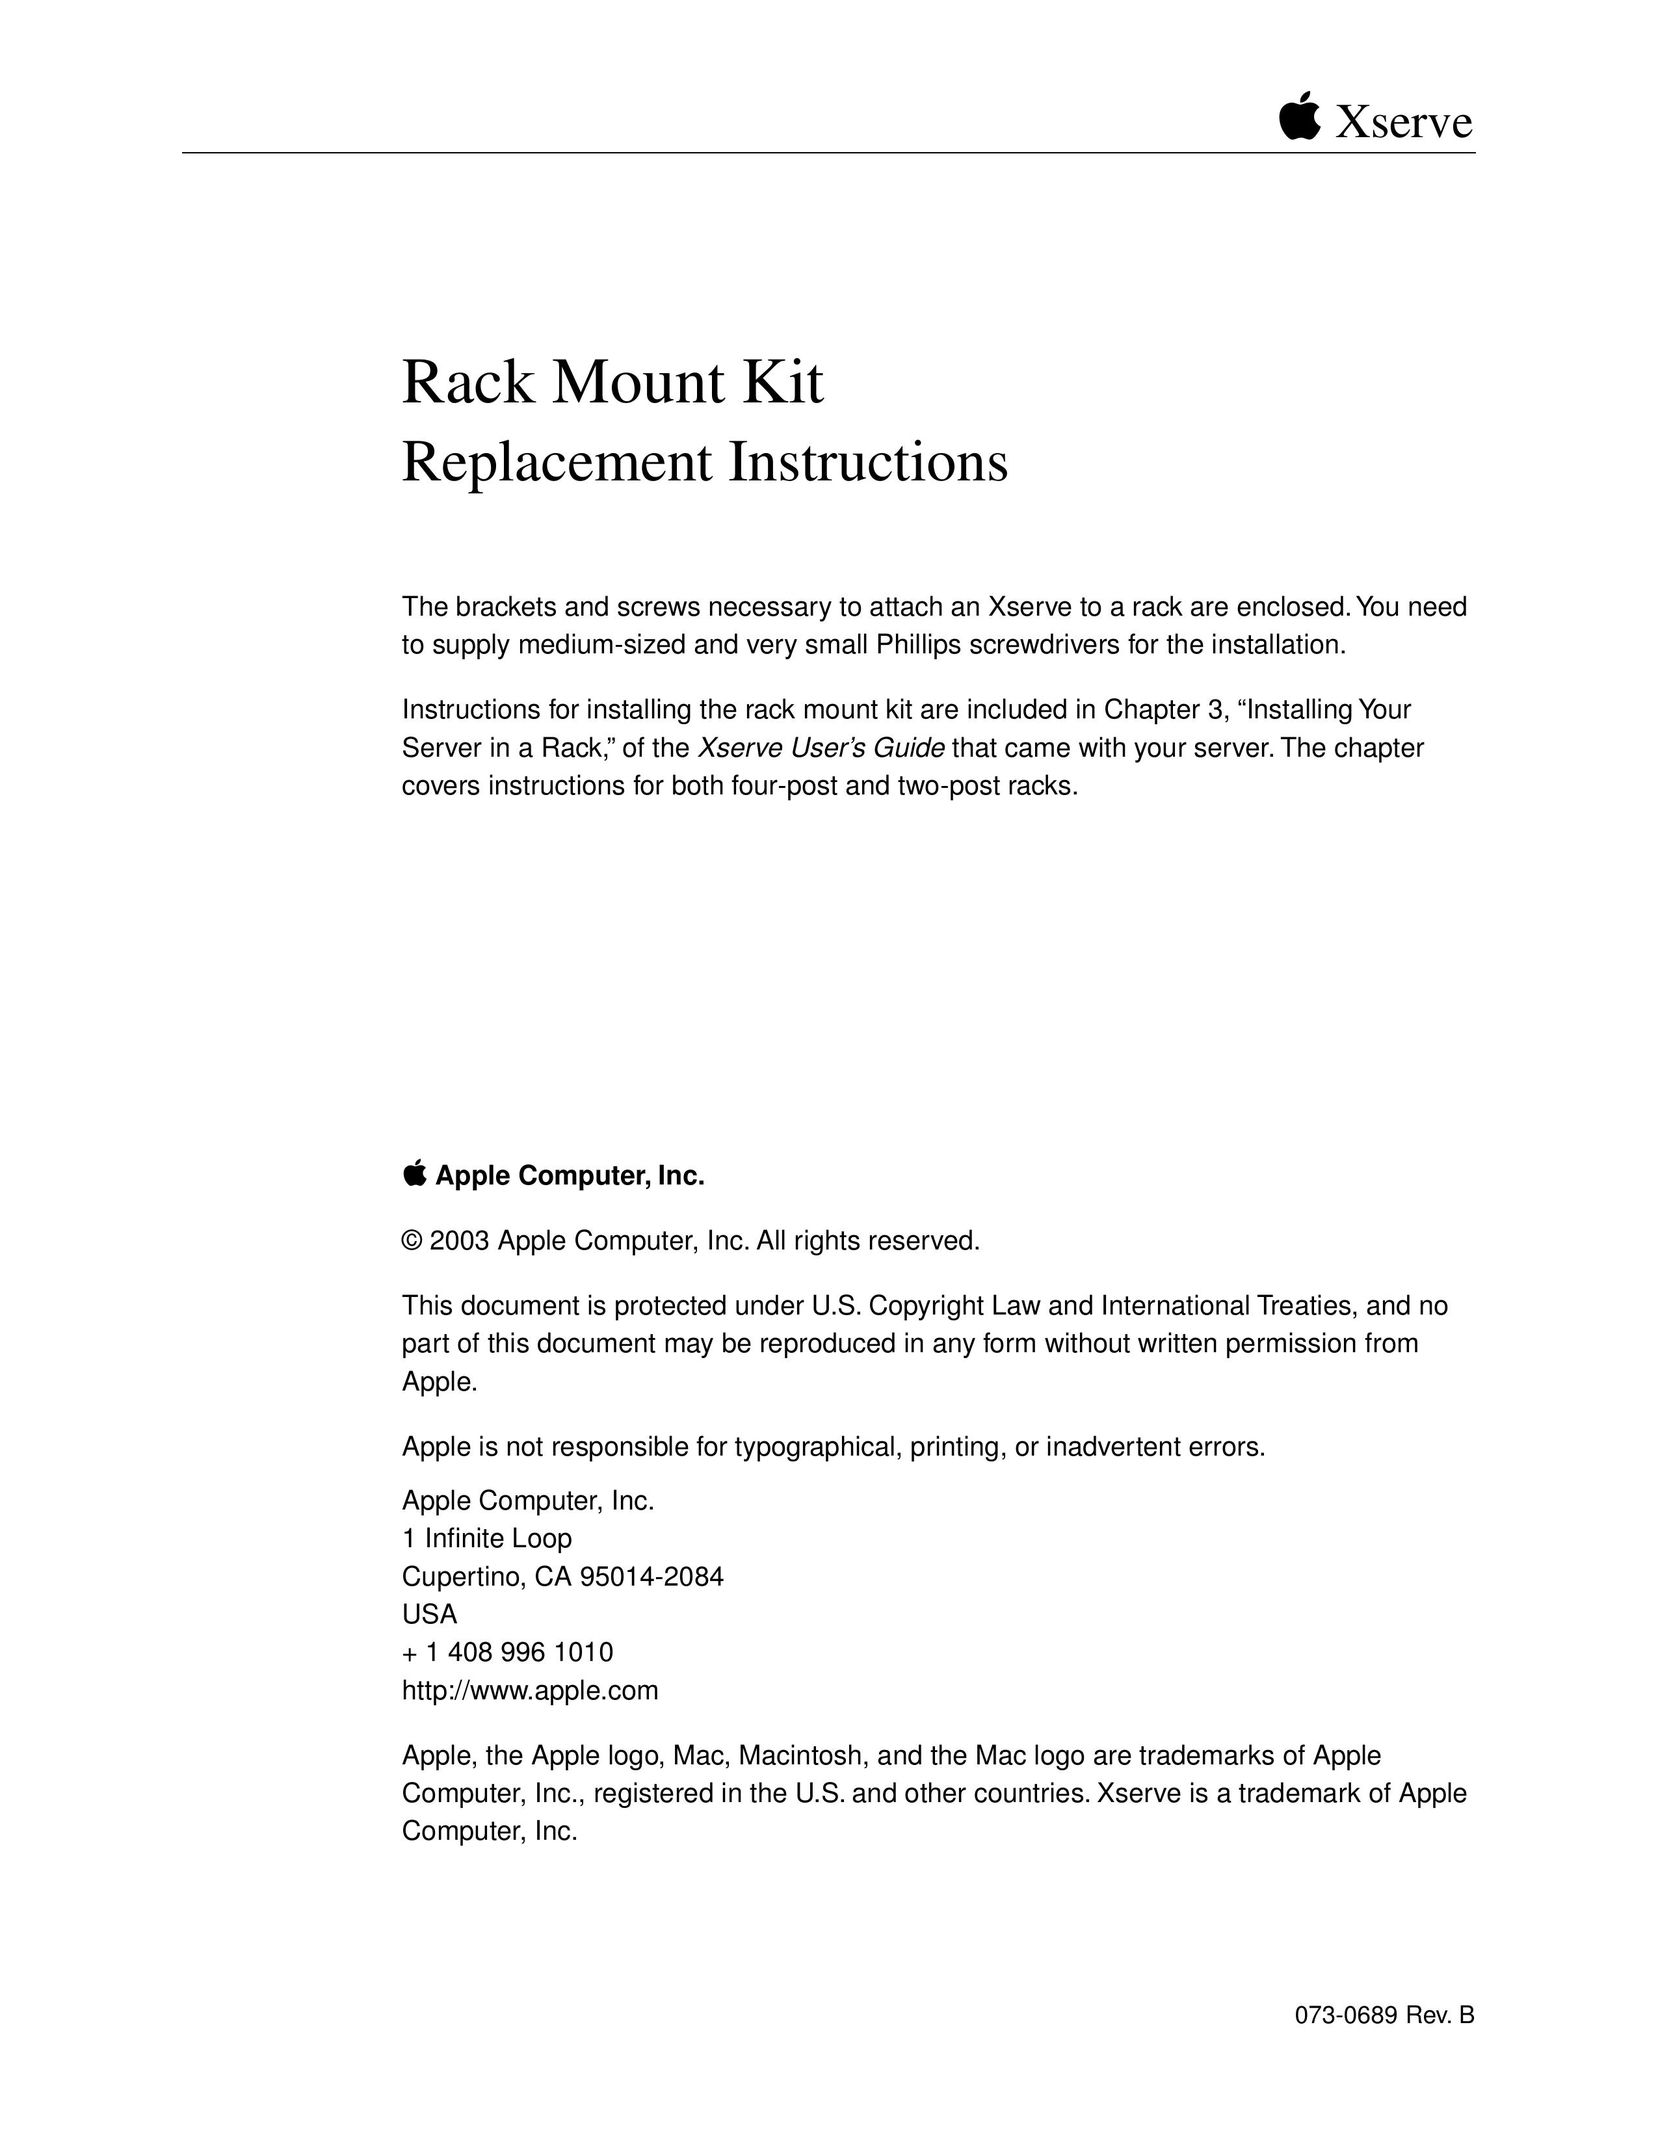 Apple Rack Mount Kit Indoor Furnishings User Manual